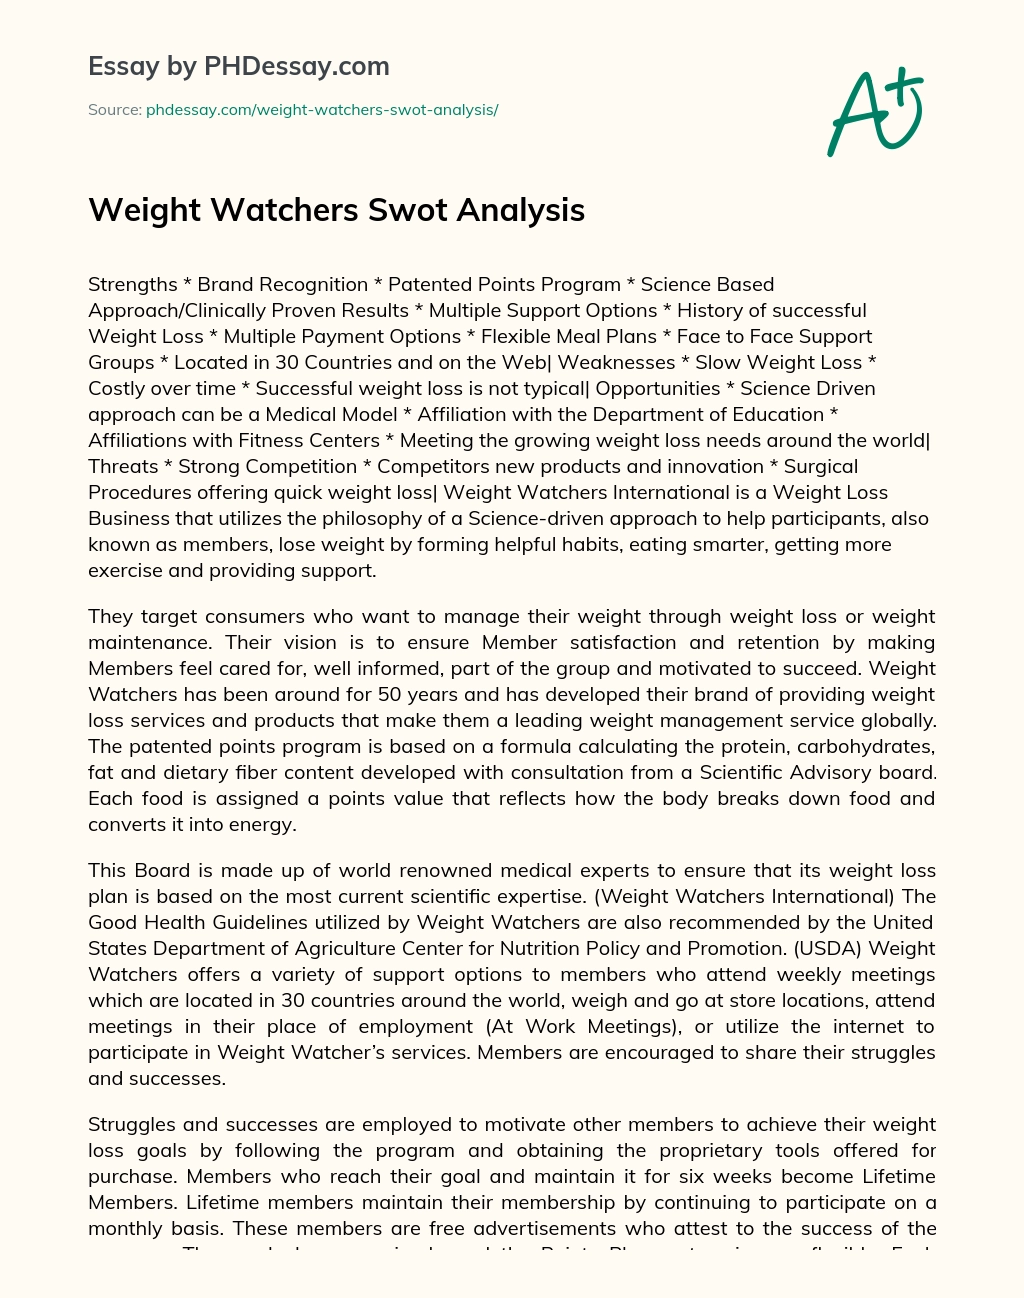 Weight Watchers Swot Analysis essay